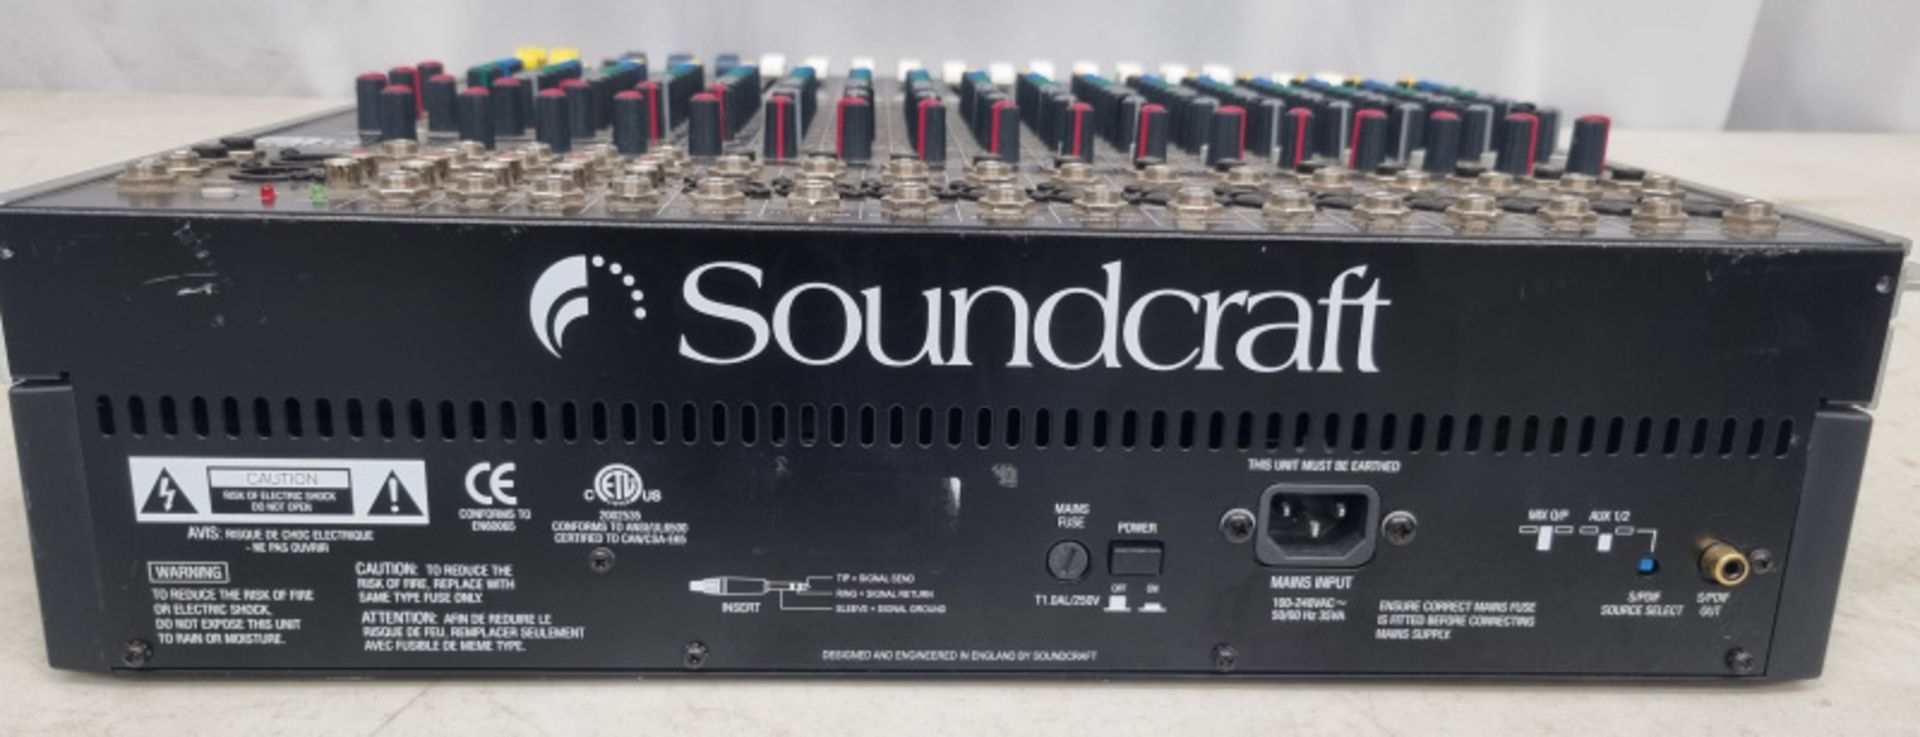 Soundcraft Spirit M12 Mixer - Image 2 of 2